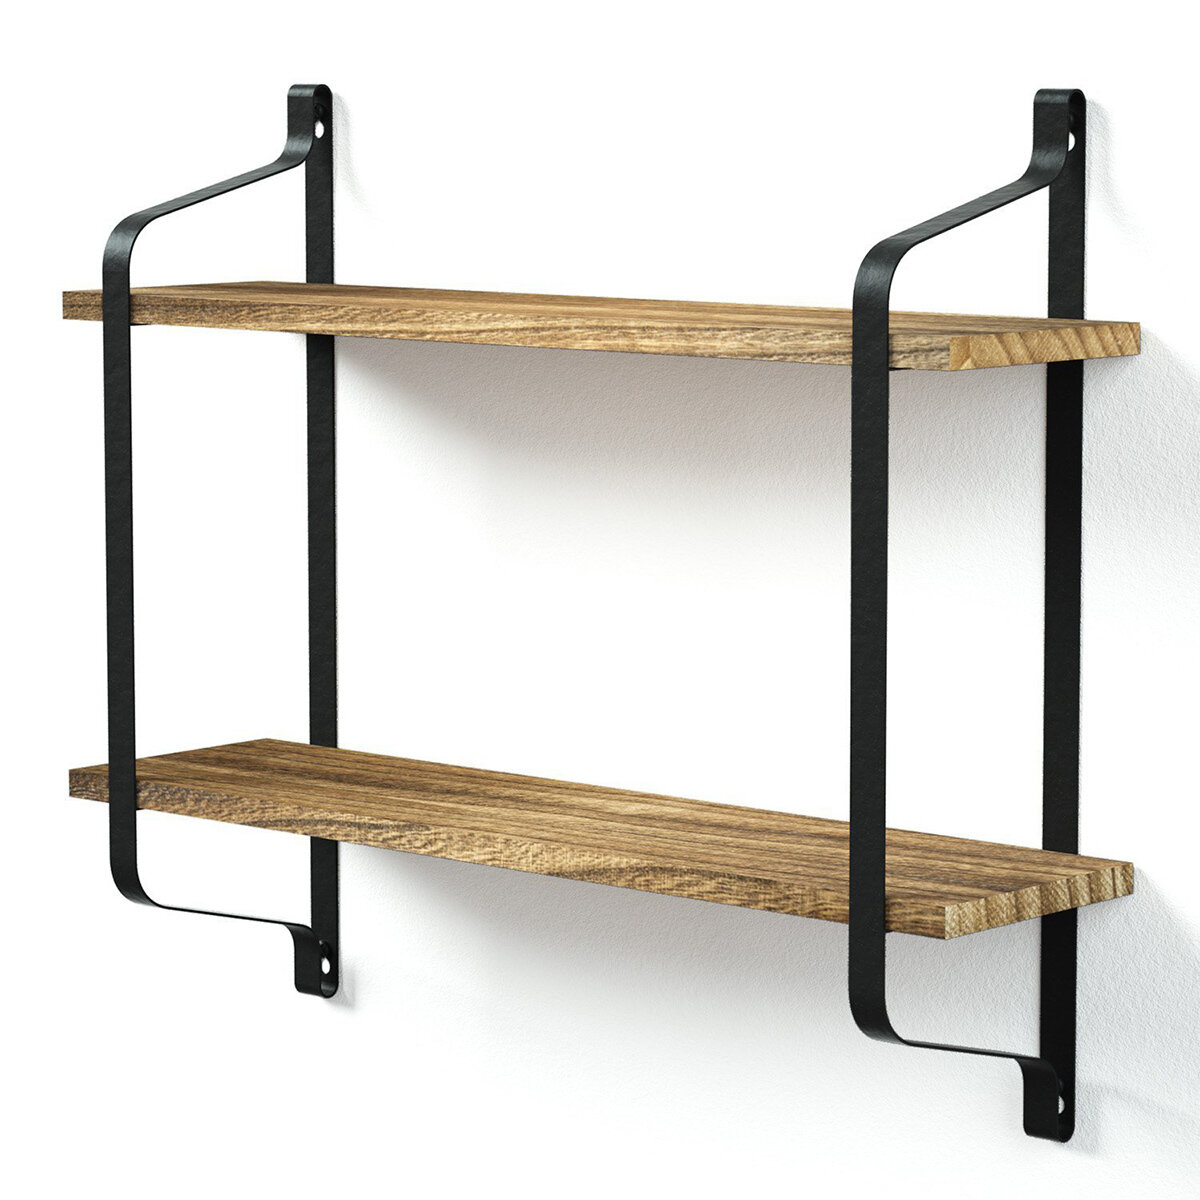 2 Tiers Wall Mounted Storage Rack Wall Hanging Wood Shelves Holder Organizer Bookshelf Display Stand